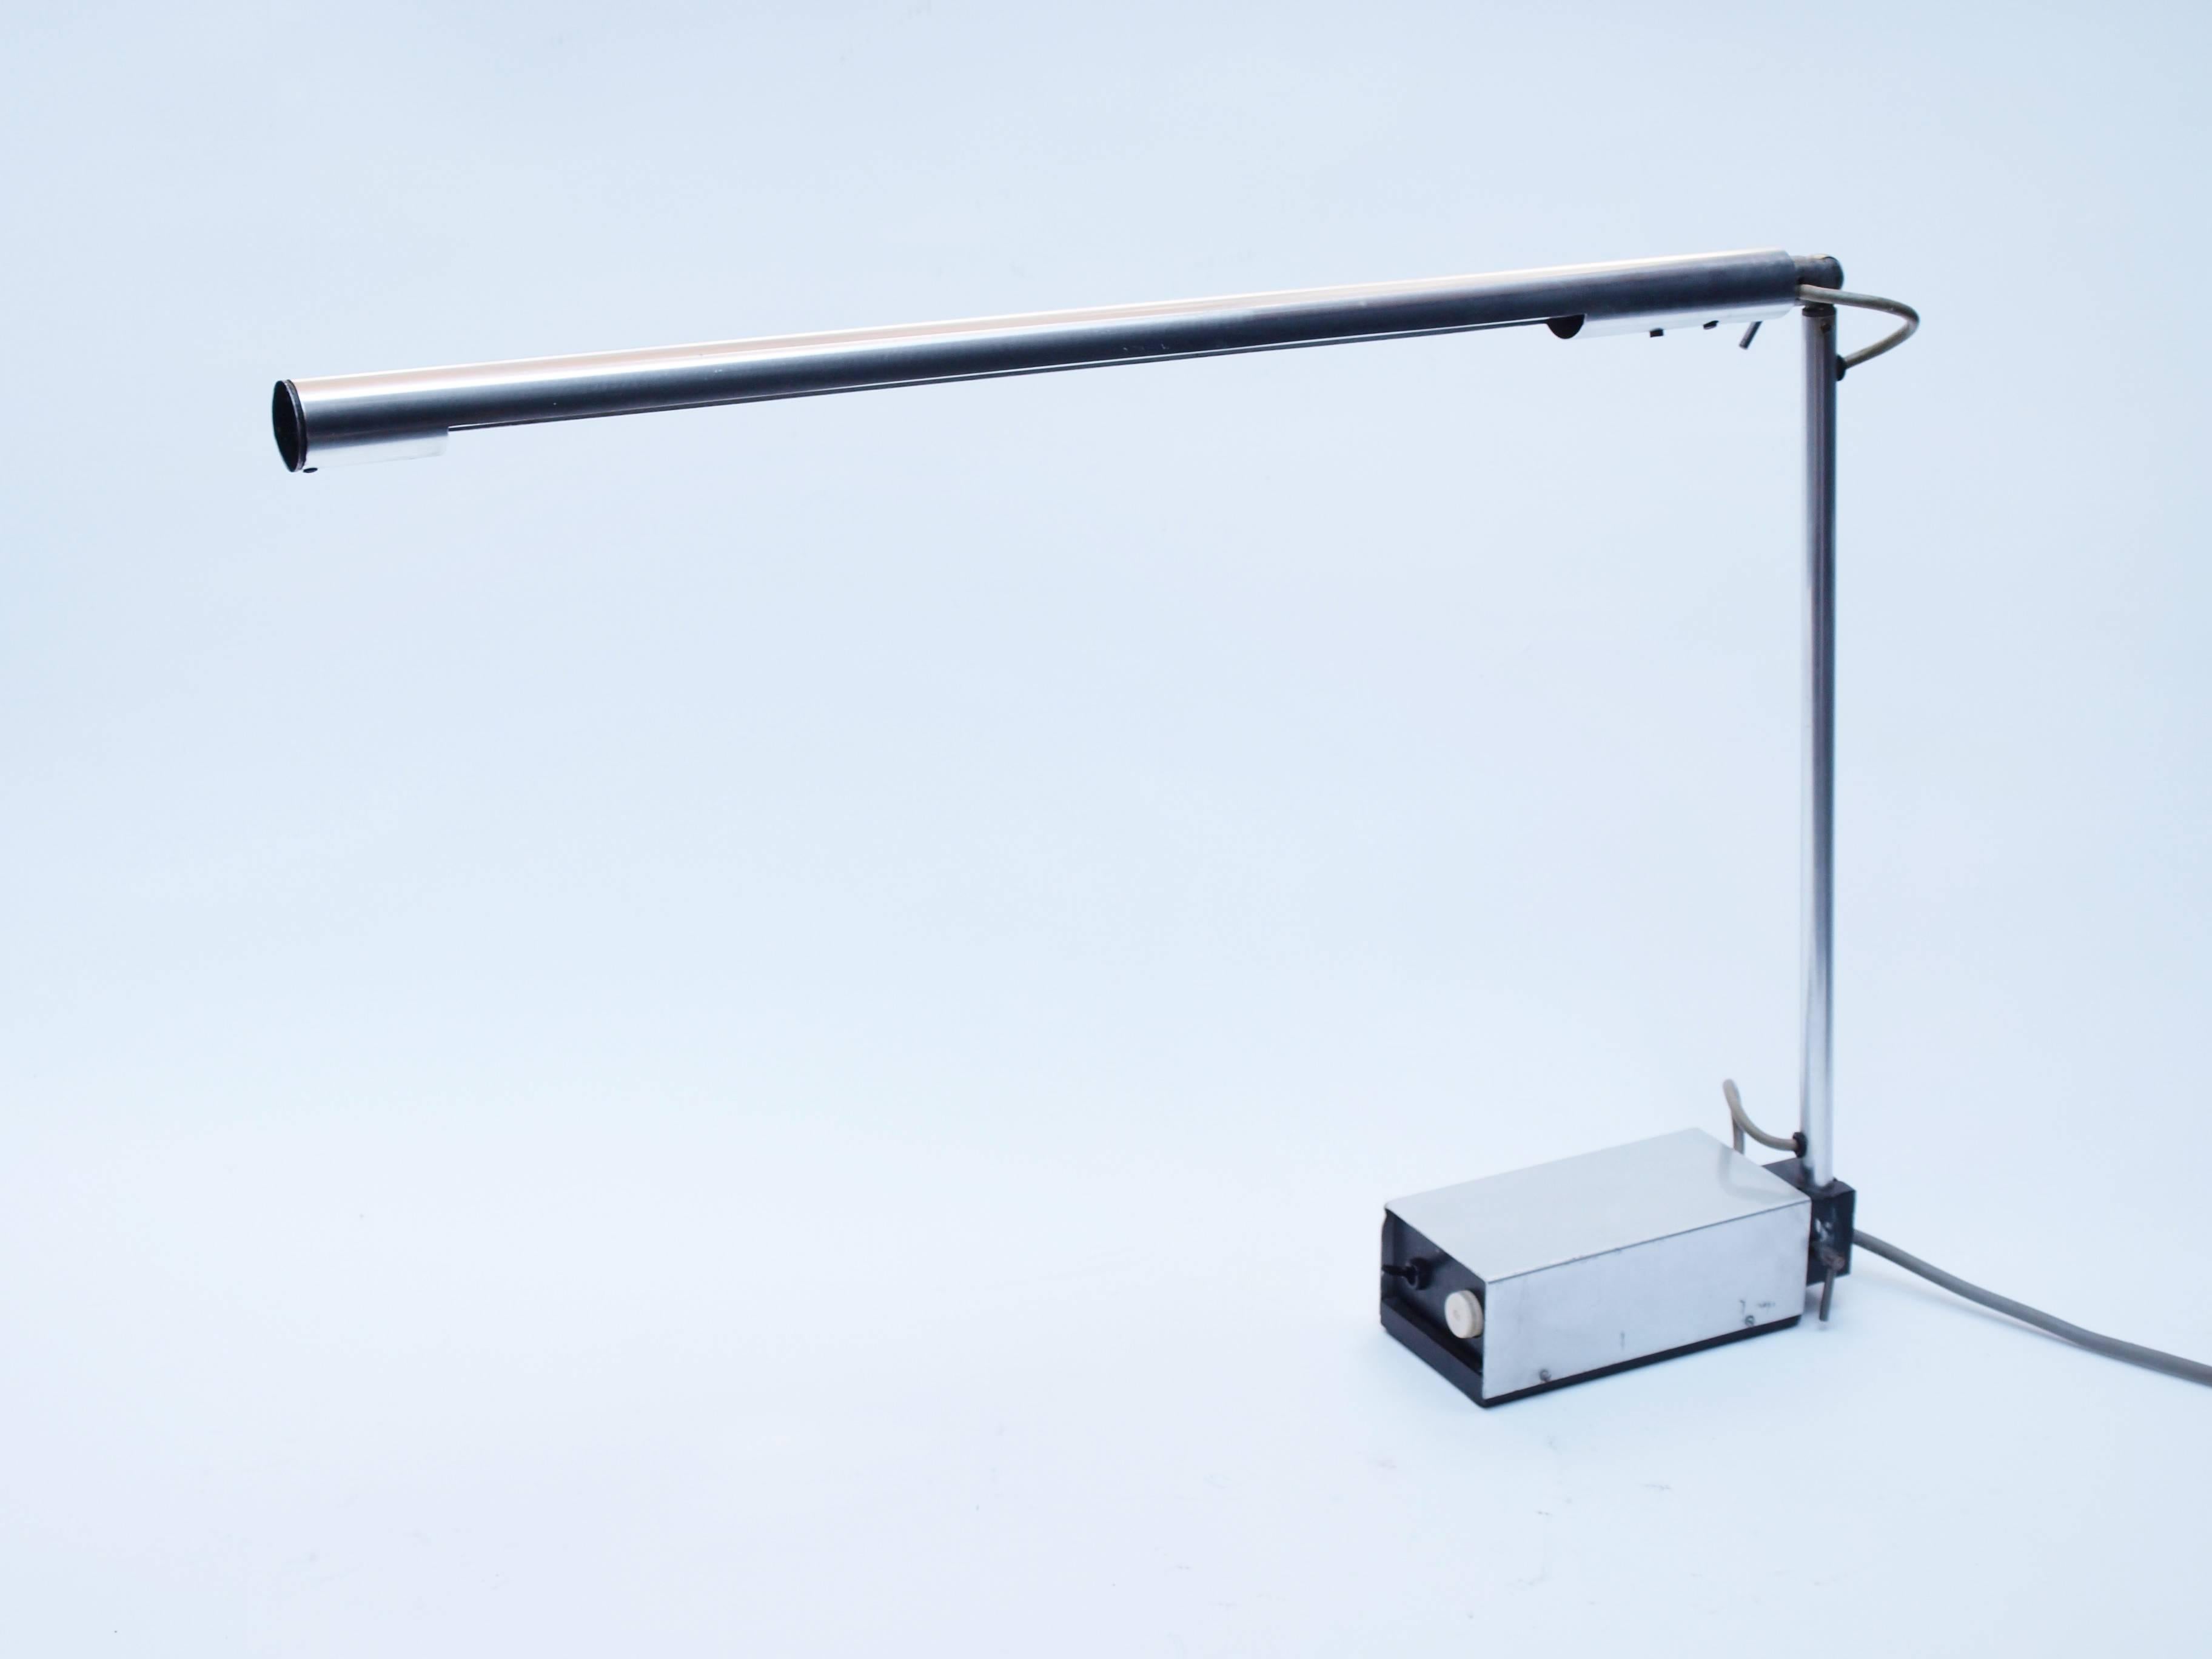 Great Britain (UK) Gerald Abramovitz MkII Desk Lamp manufactured in 1964 by Best & Lloyd